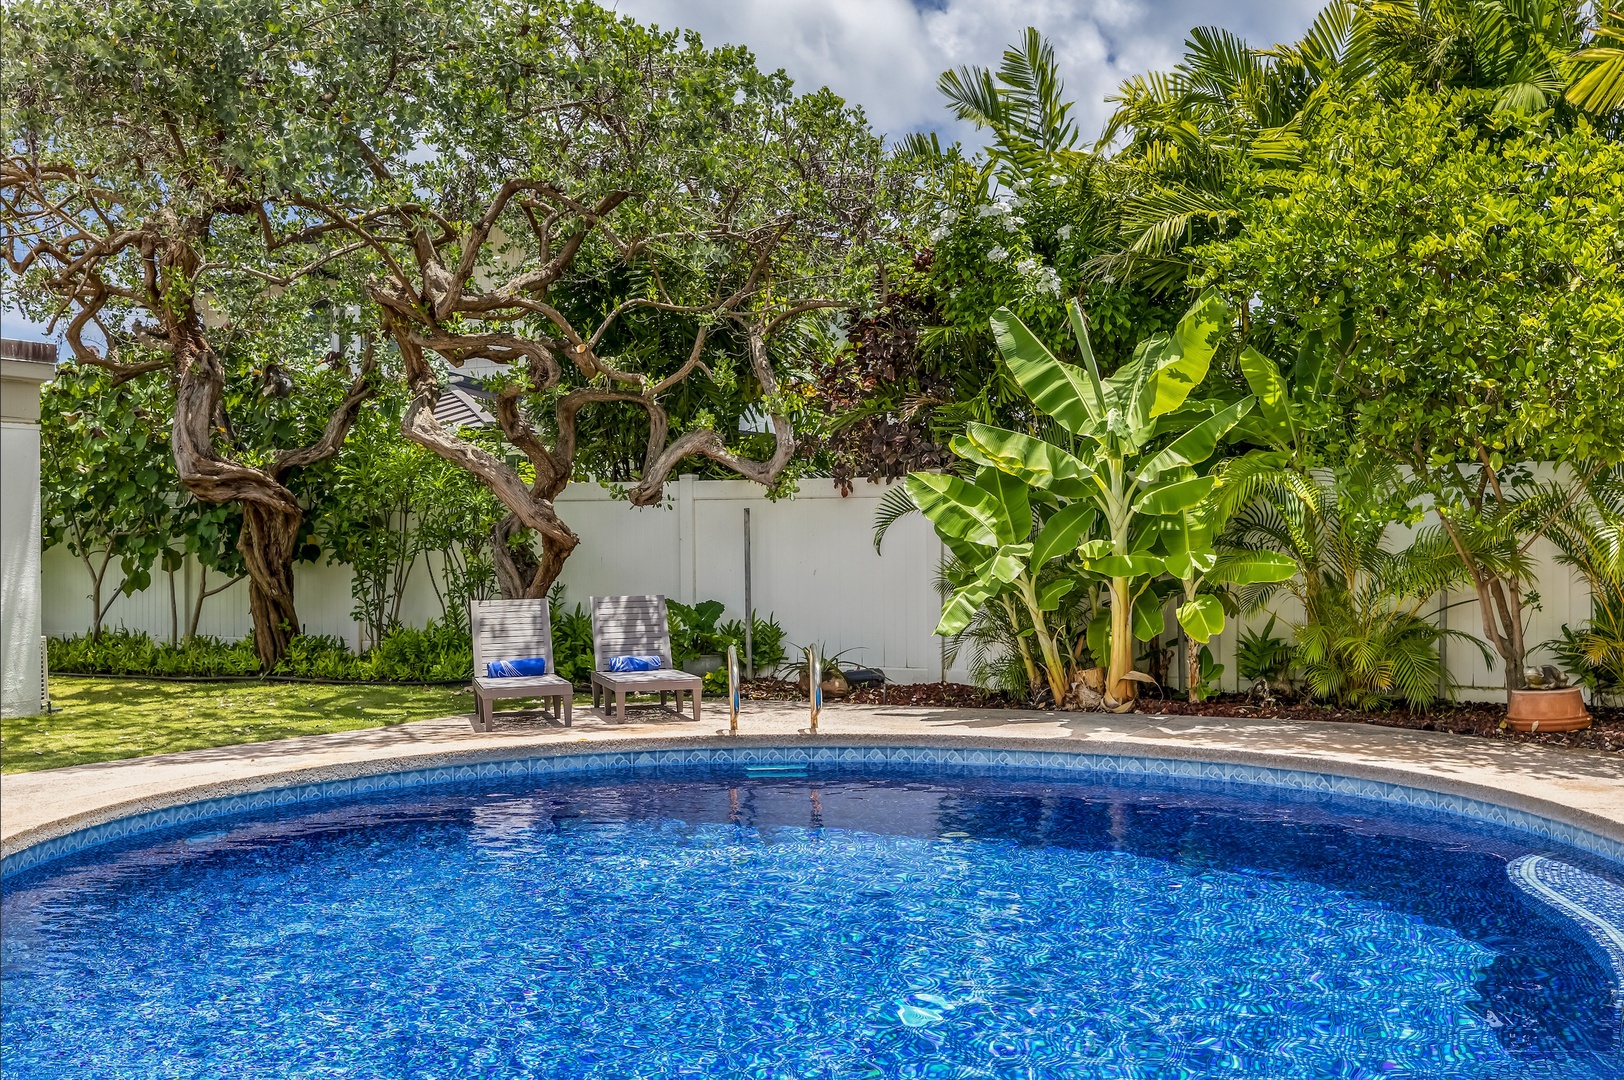 Kailua Vacation Rentals, Lokomaika'i Kailua - Crystal clear pool, perfect for soaking under the Hawaii sun!